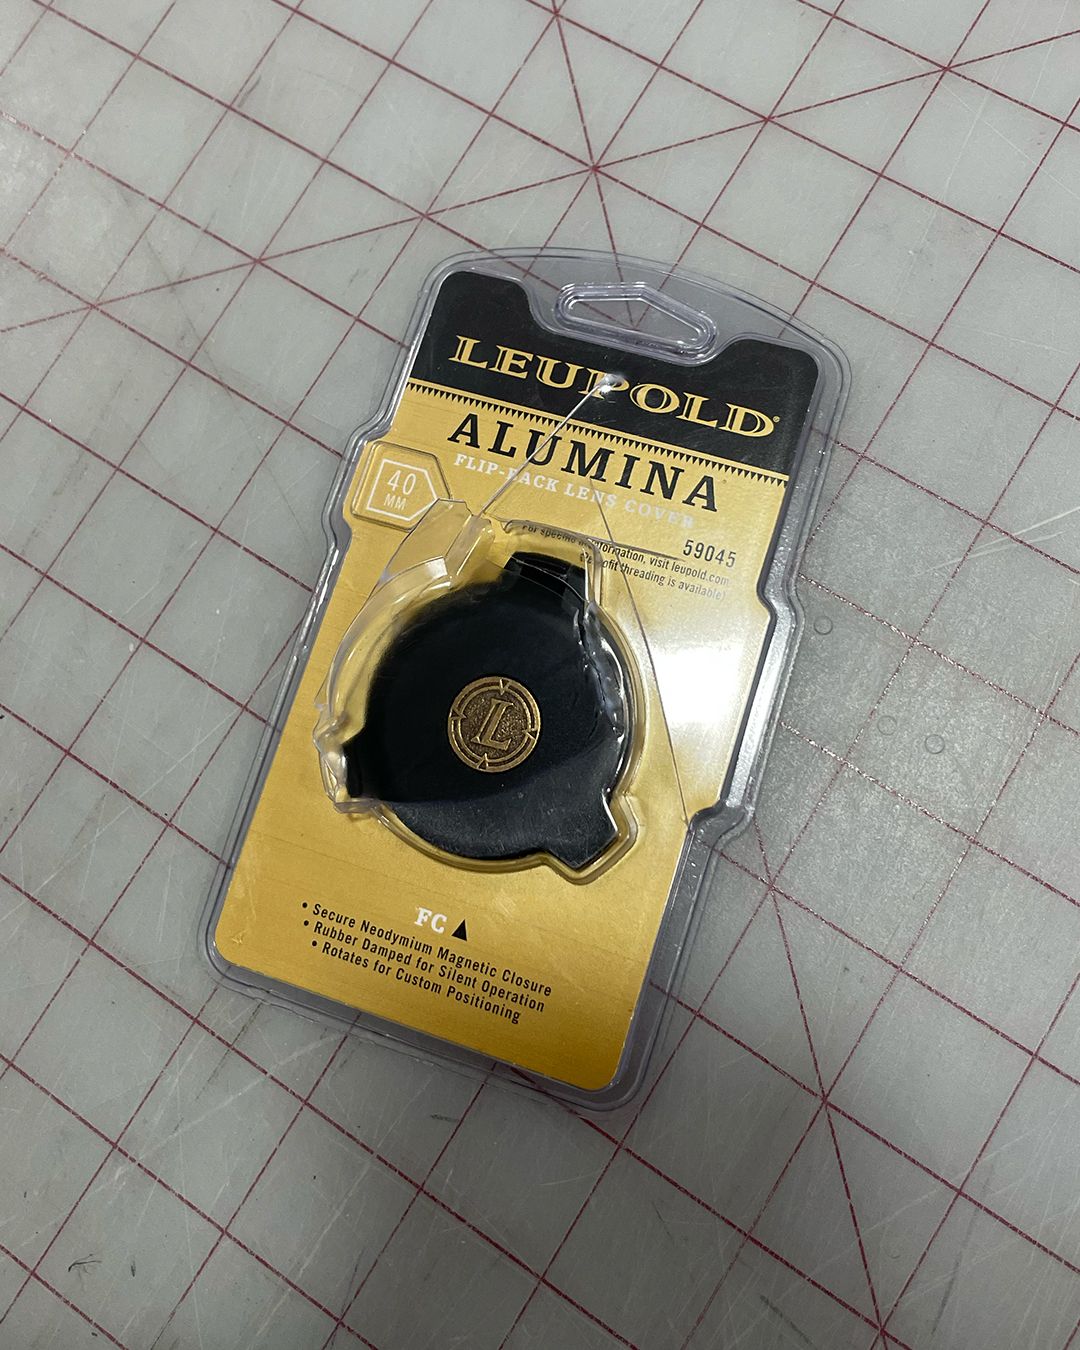 USED – Leupold Alum Flip-Back Lens Cover – 40MM